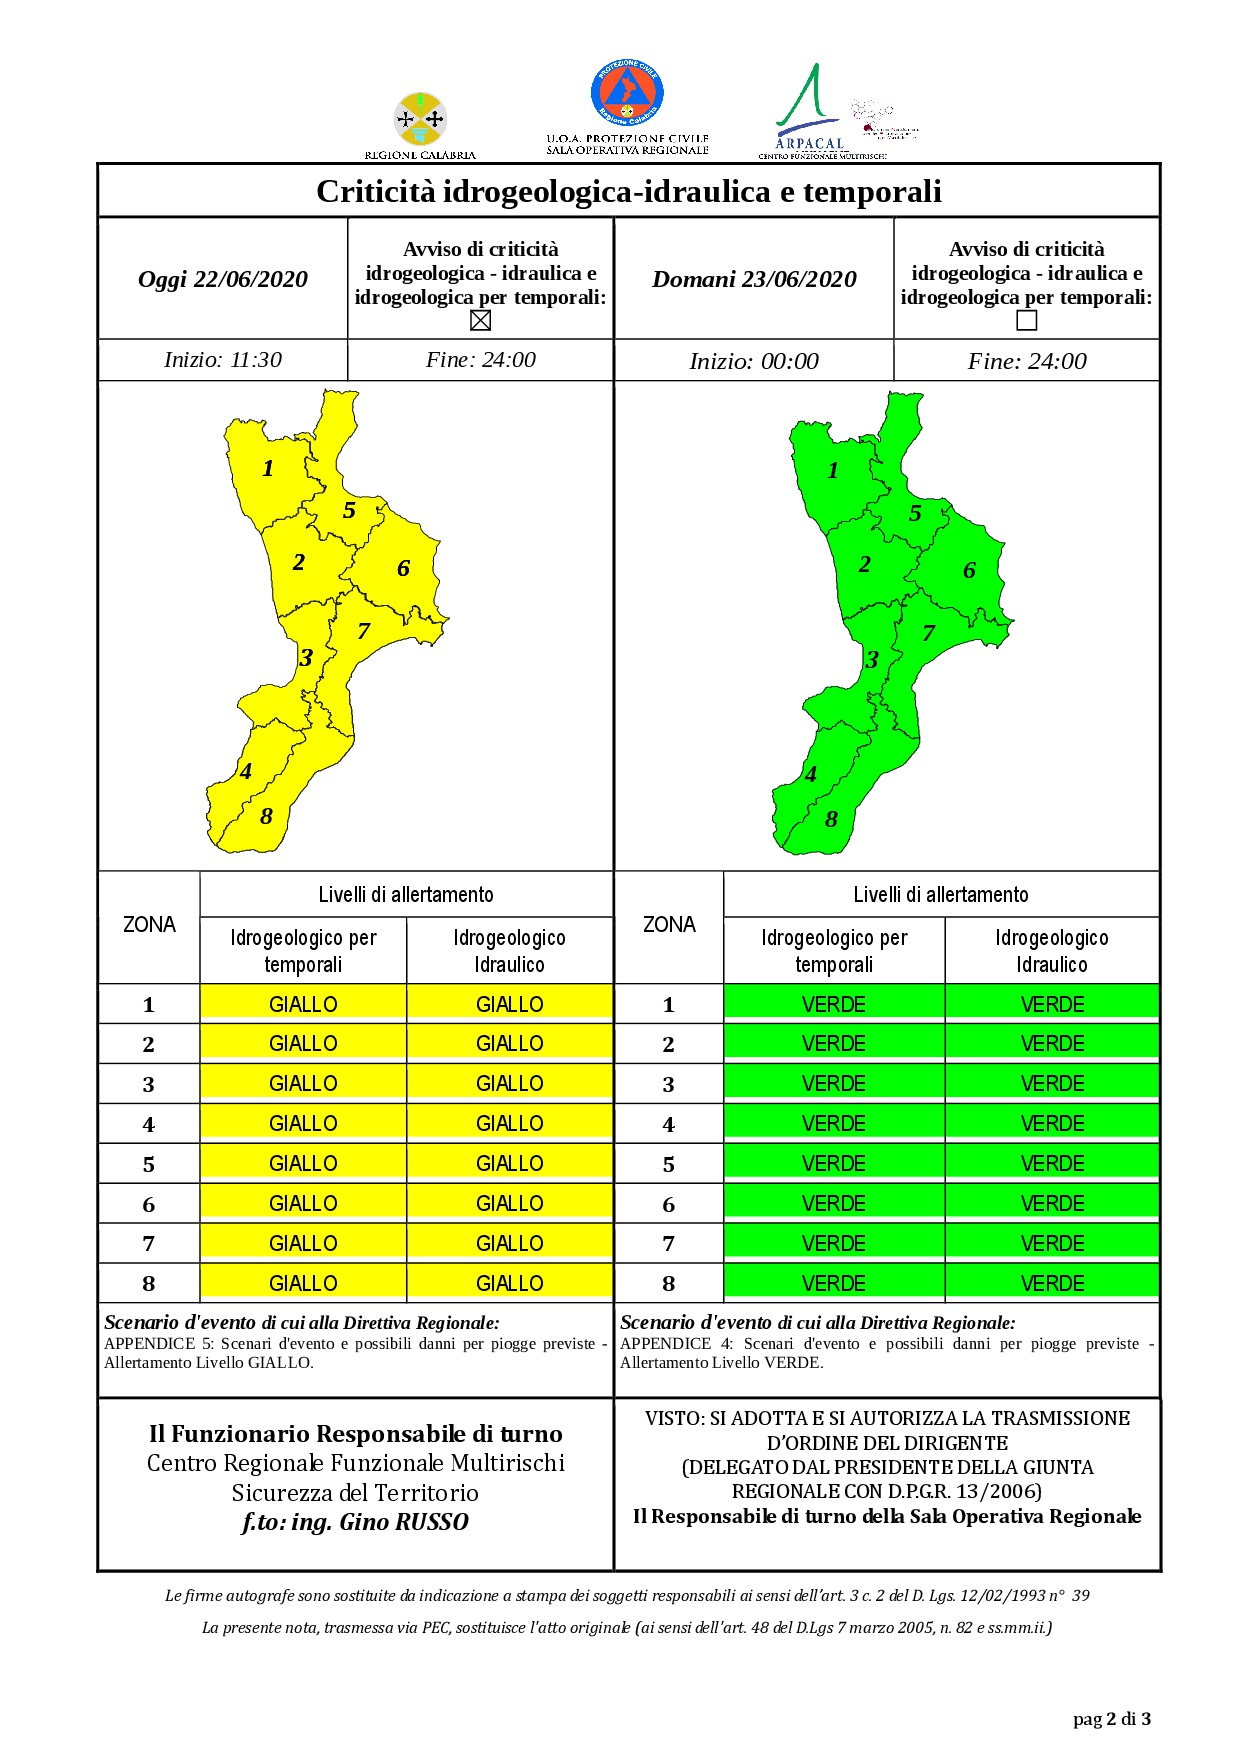 Criticità idrogeologica-idraulica e temporali in Calabria 22-06-2020